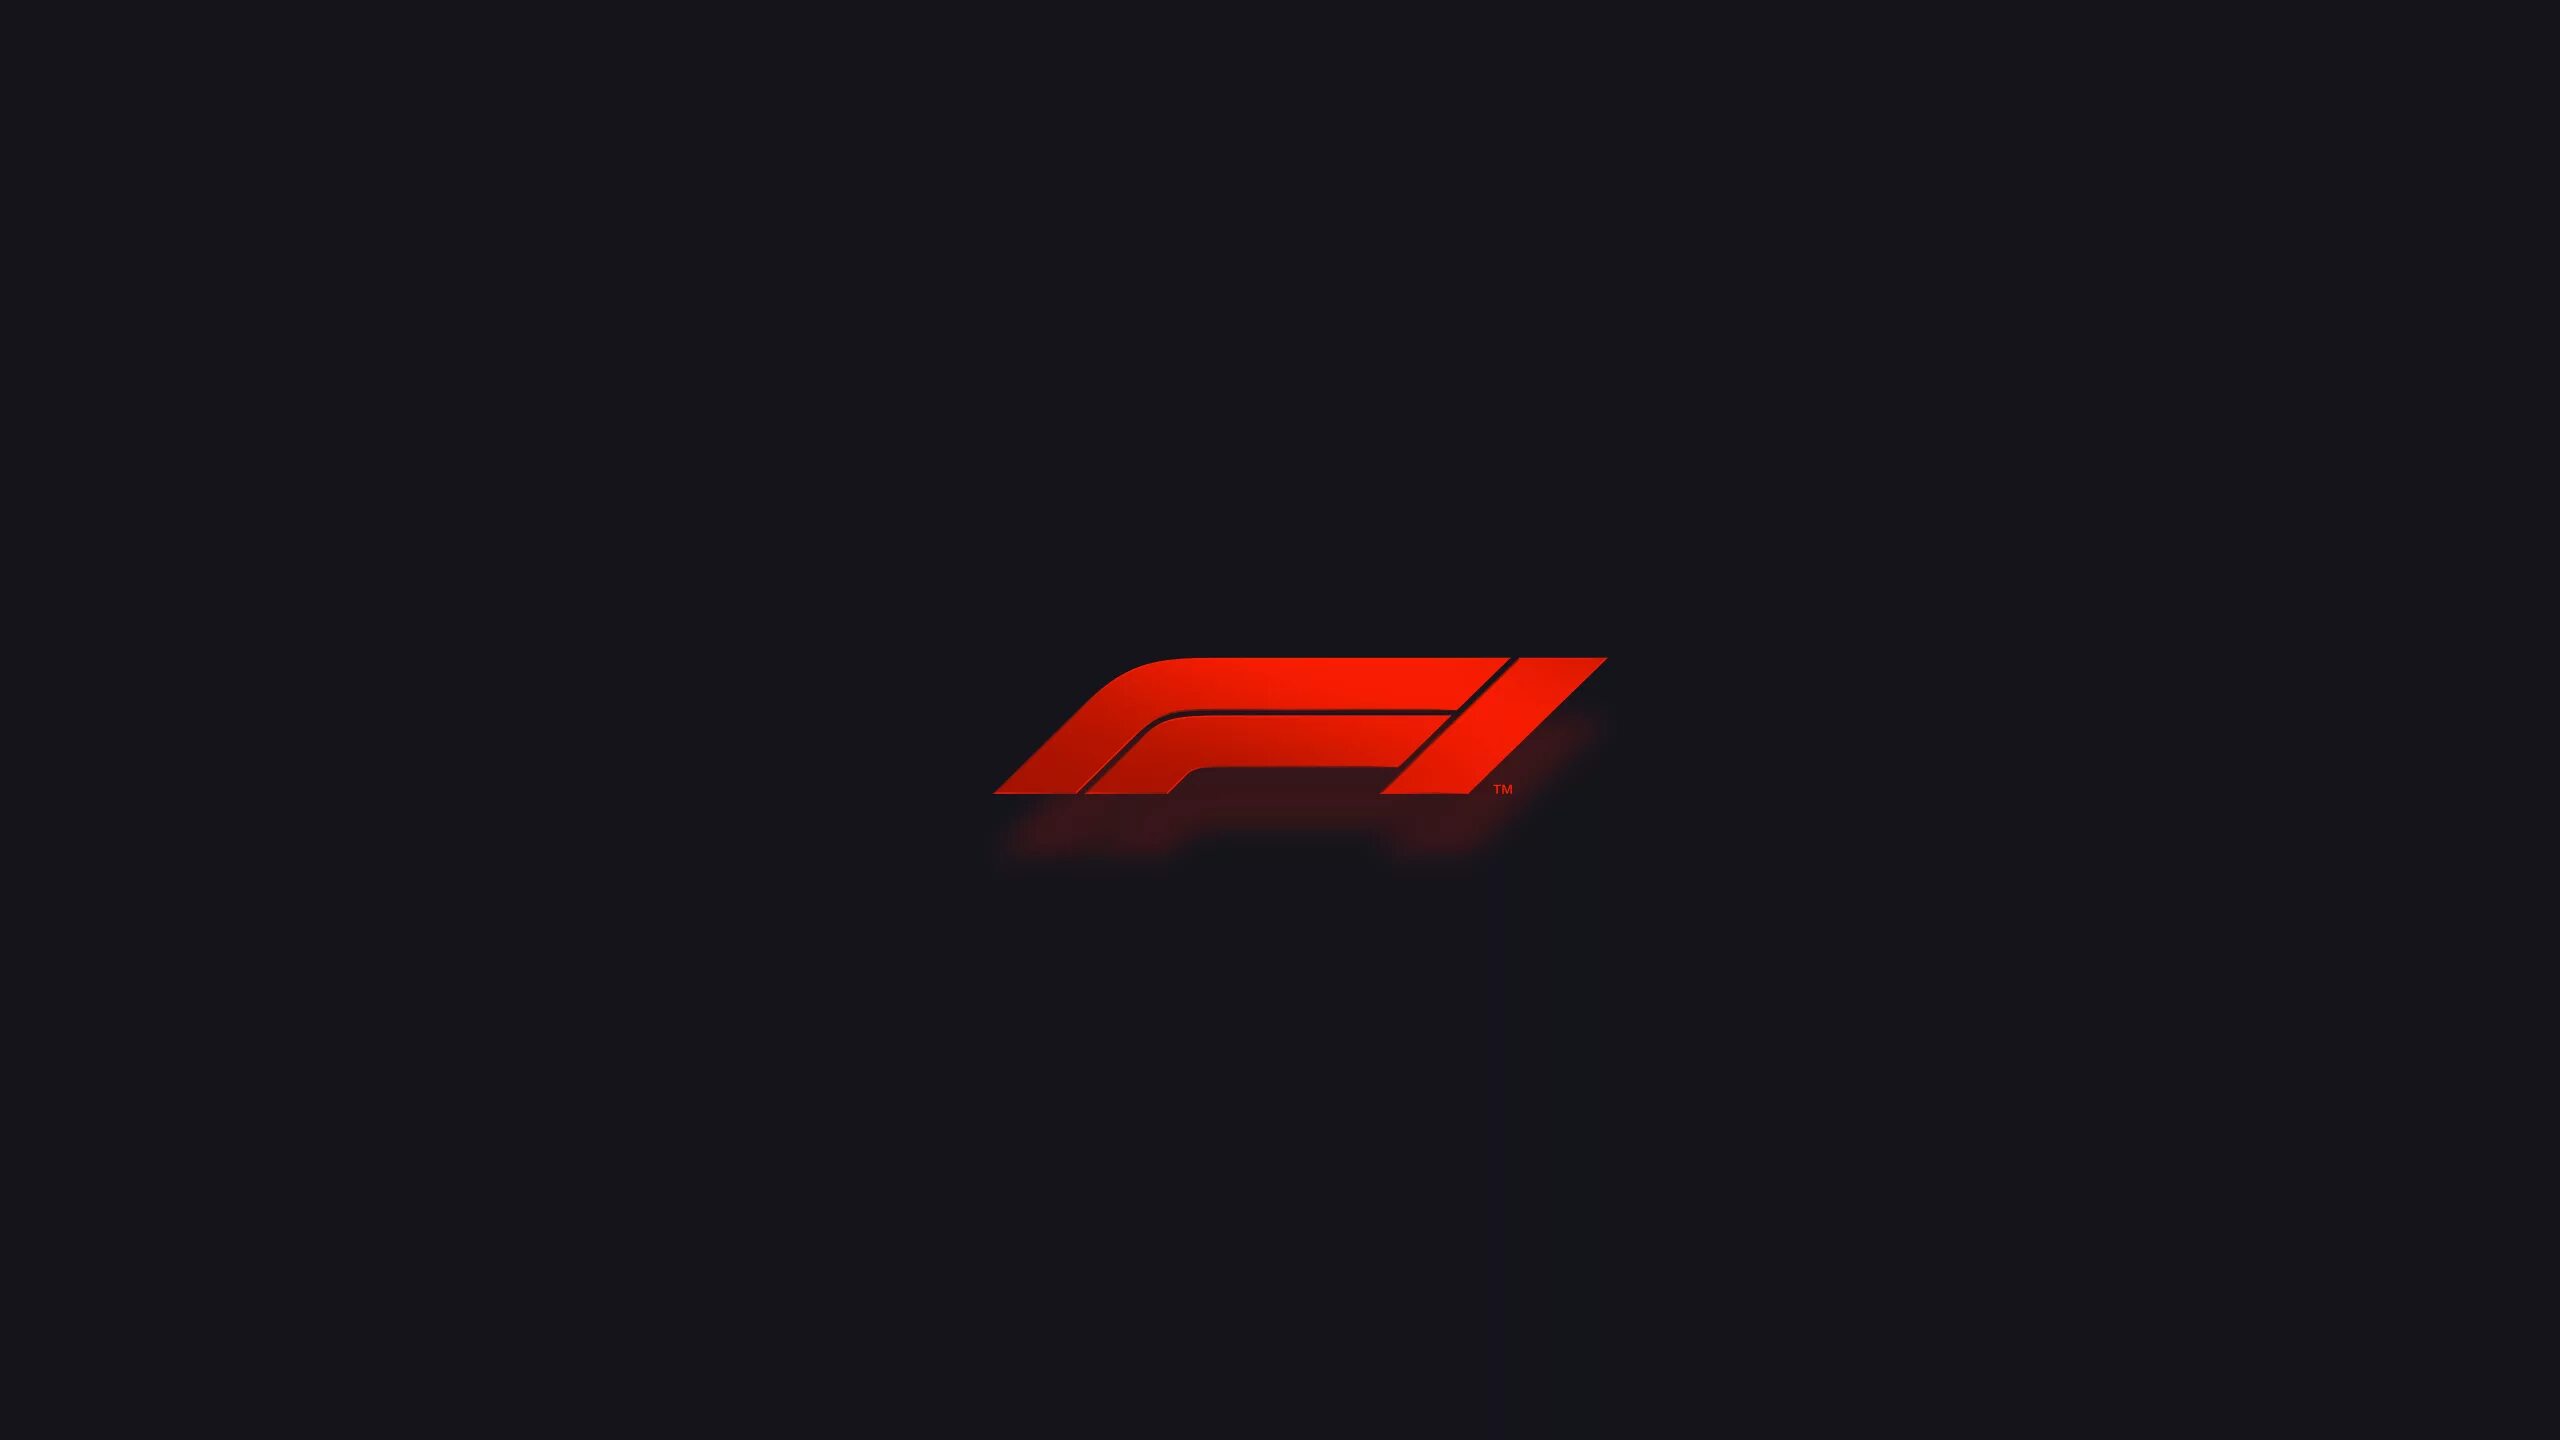 MCLAREN f1 logo. F1 2022 logo. Формула 1 логотип. Фон для логотипа.